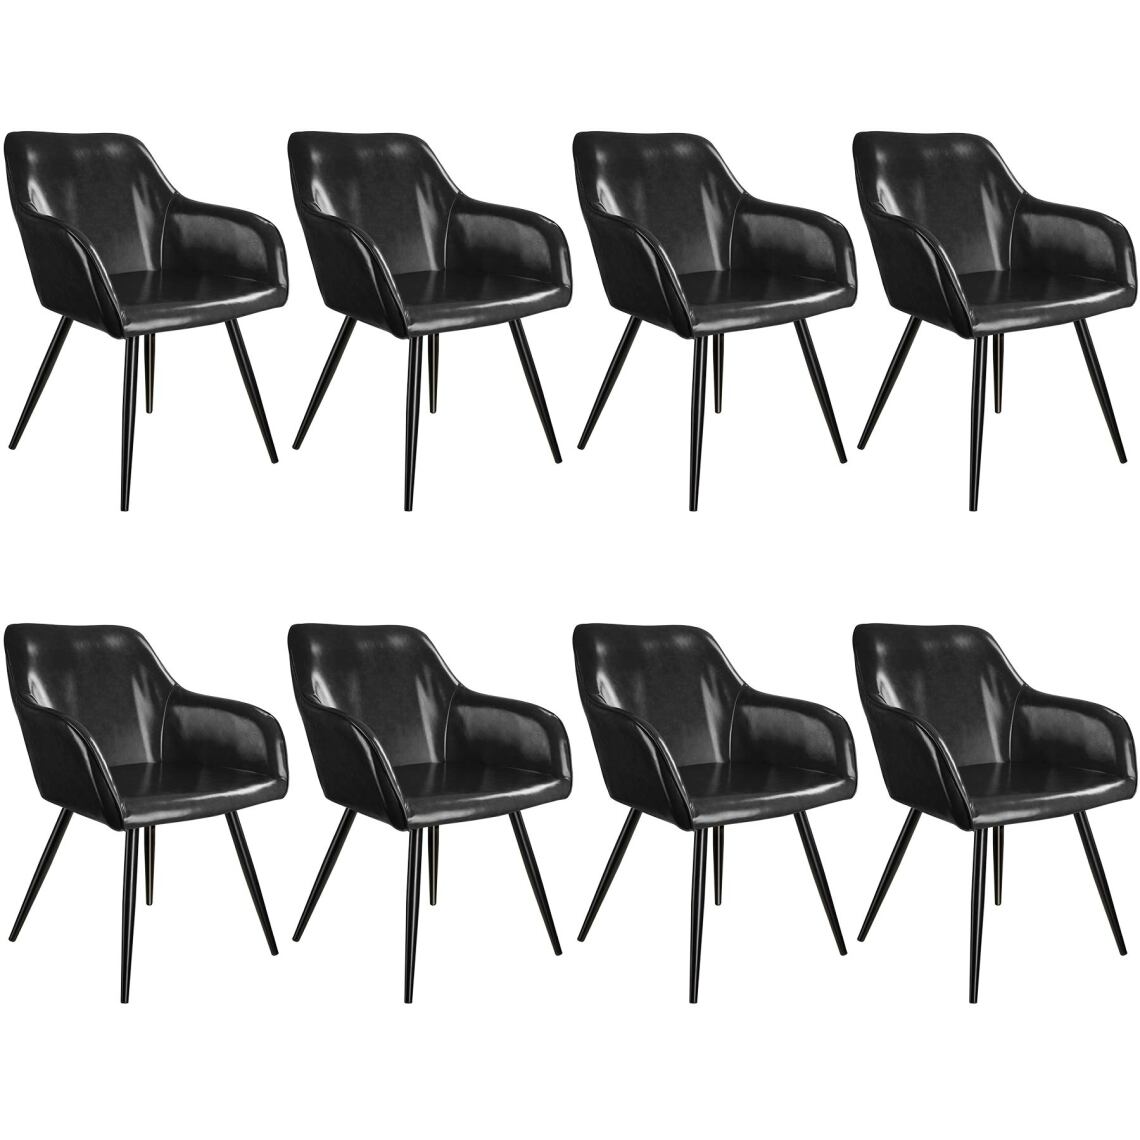 Tectake - 8 Chaises Marilyn en cuir synthétique - noir - Chaises